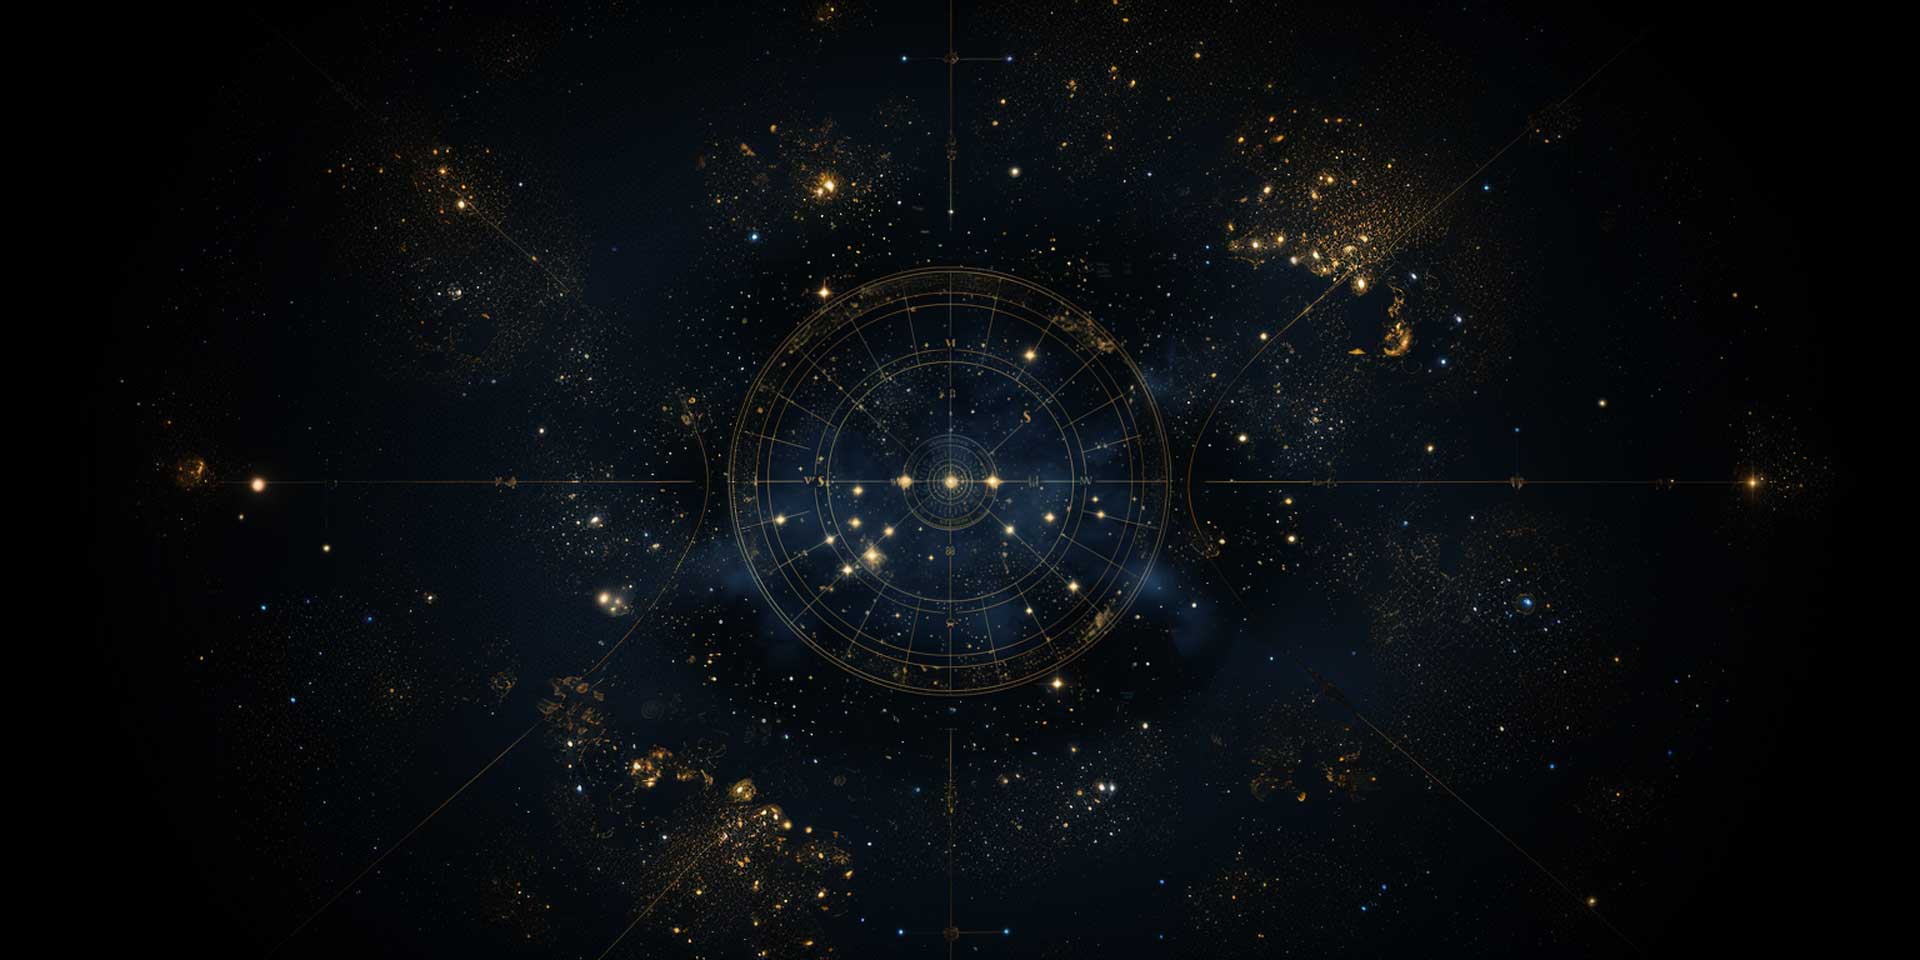 A celestial chart horoscope